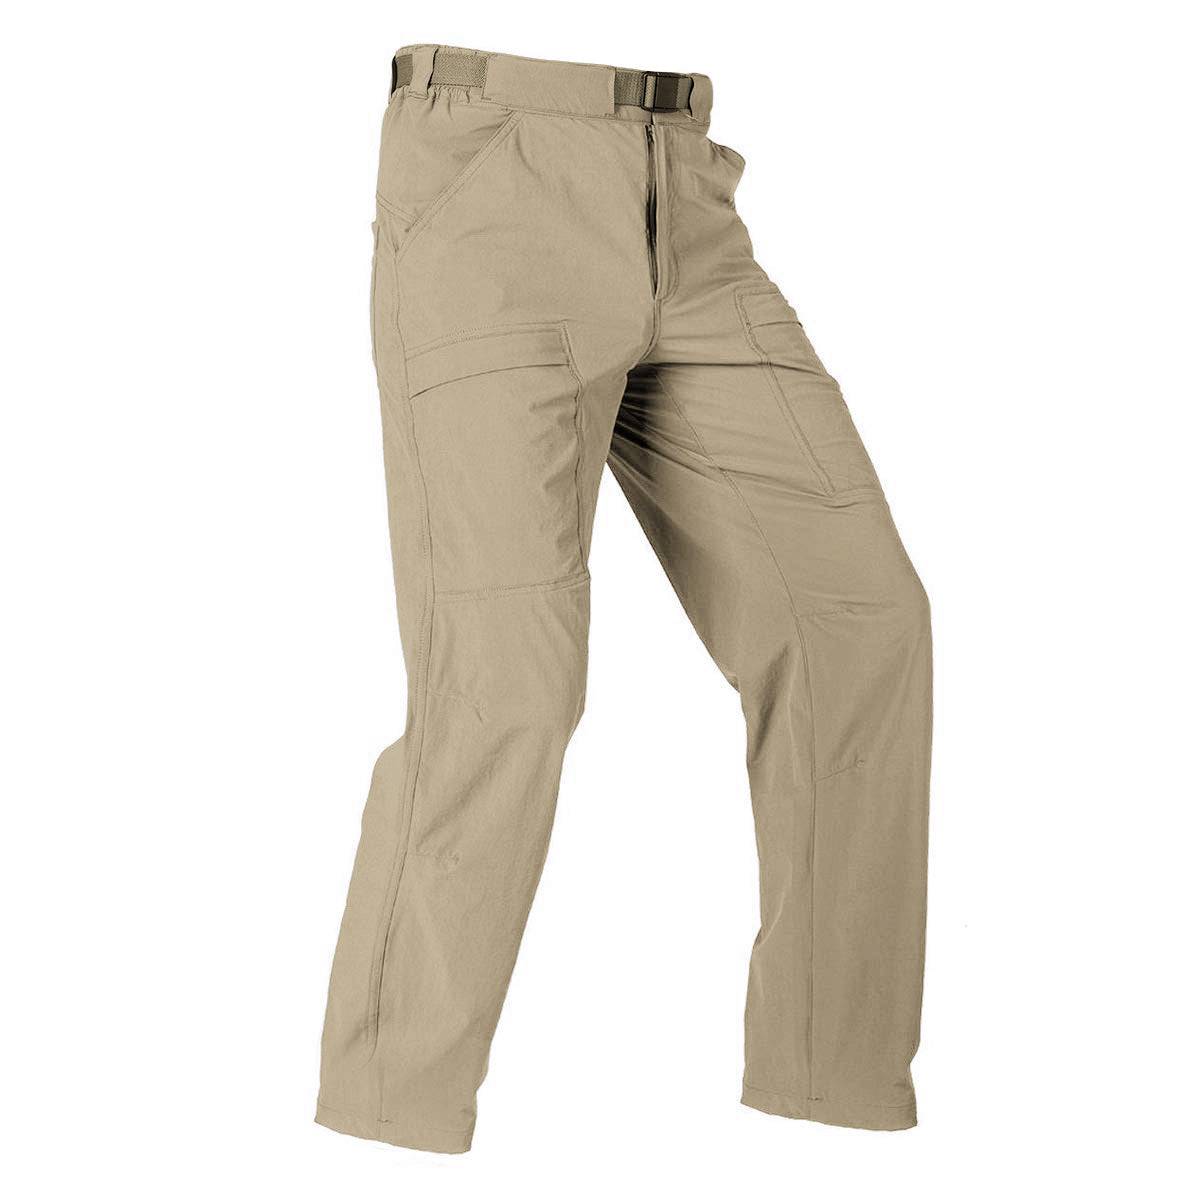 RADIANT Men's Lightweight Quick Dry Tactical Pants